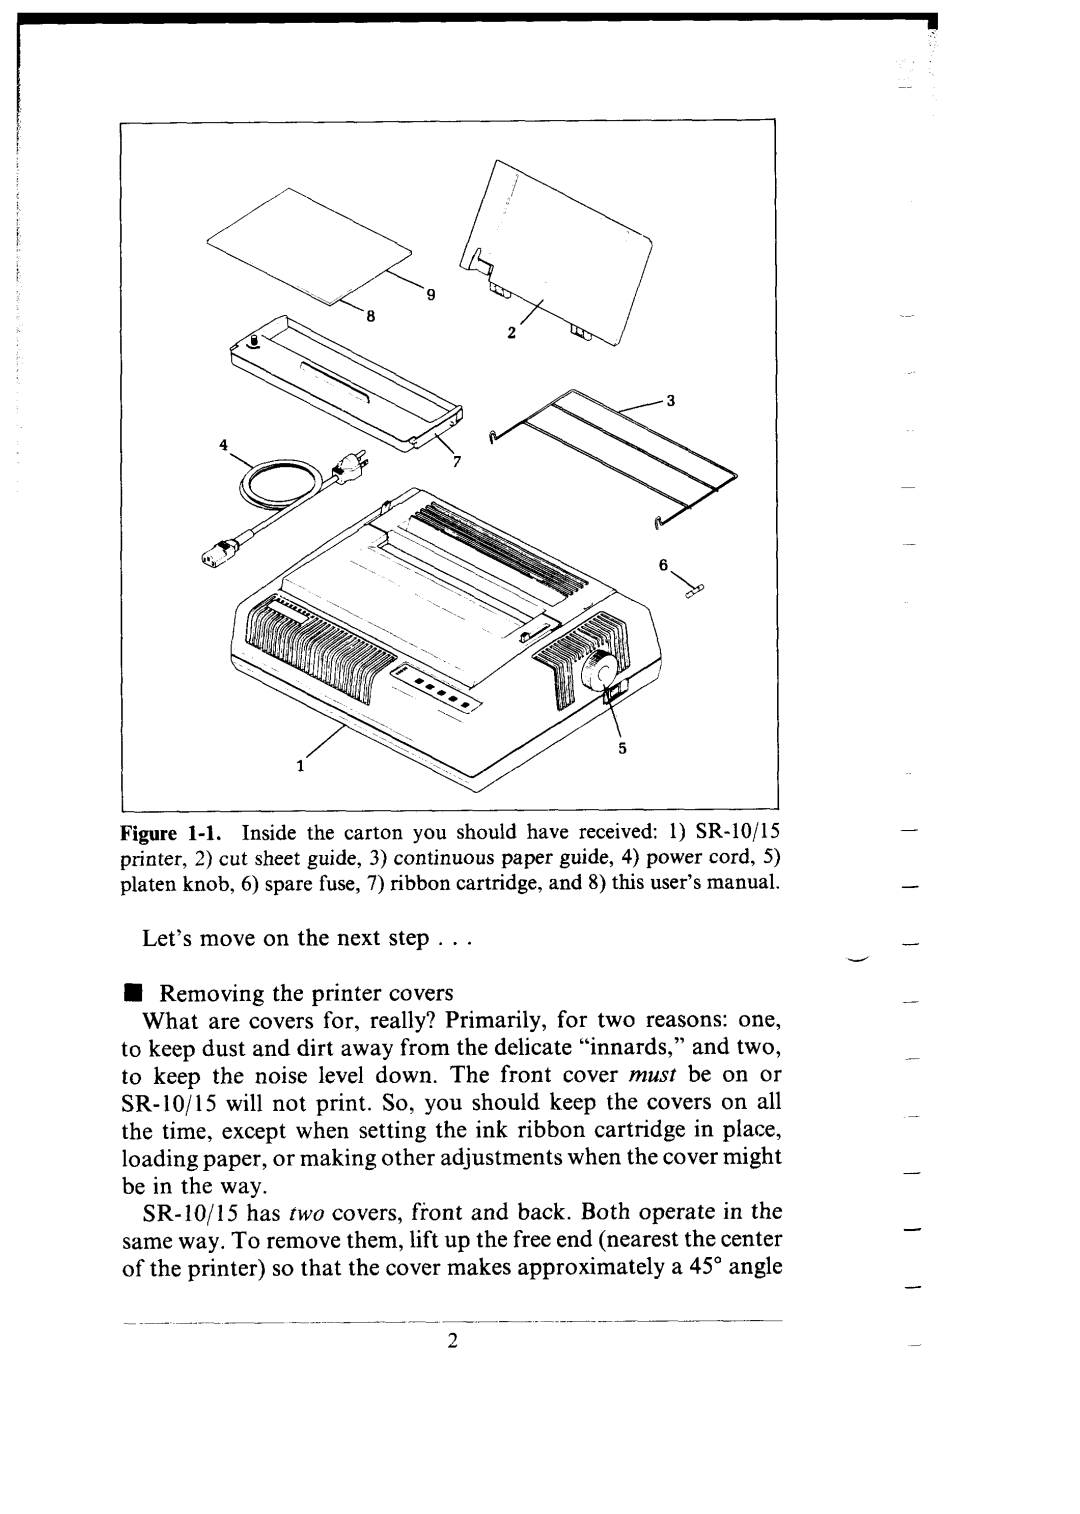 Star Micronics SR-10/I5 user manual on the next 